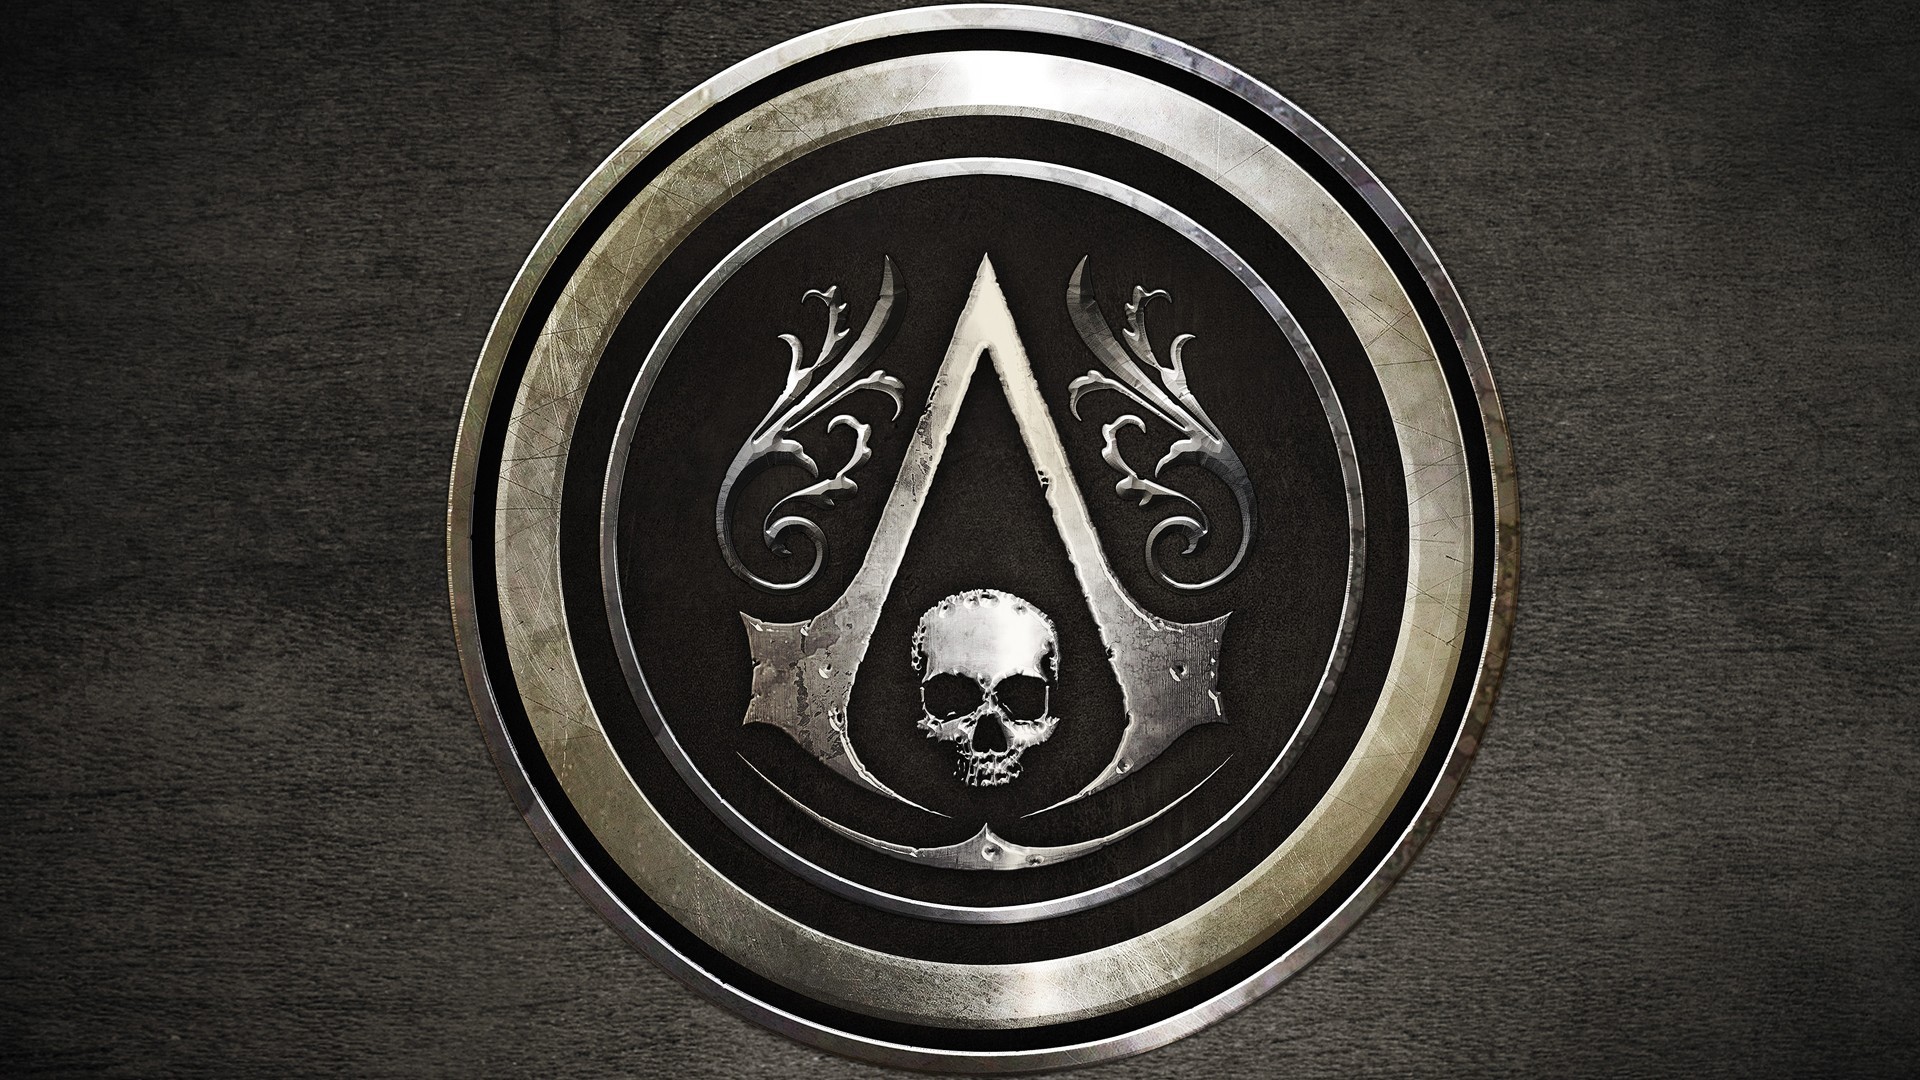 1920x1080 Assassins Creed Black Flag logo hd wallpaper background - HD .